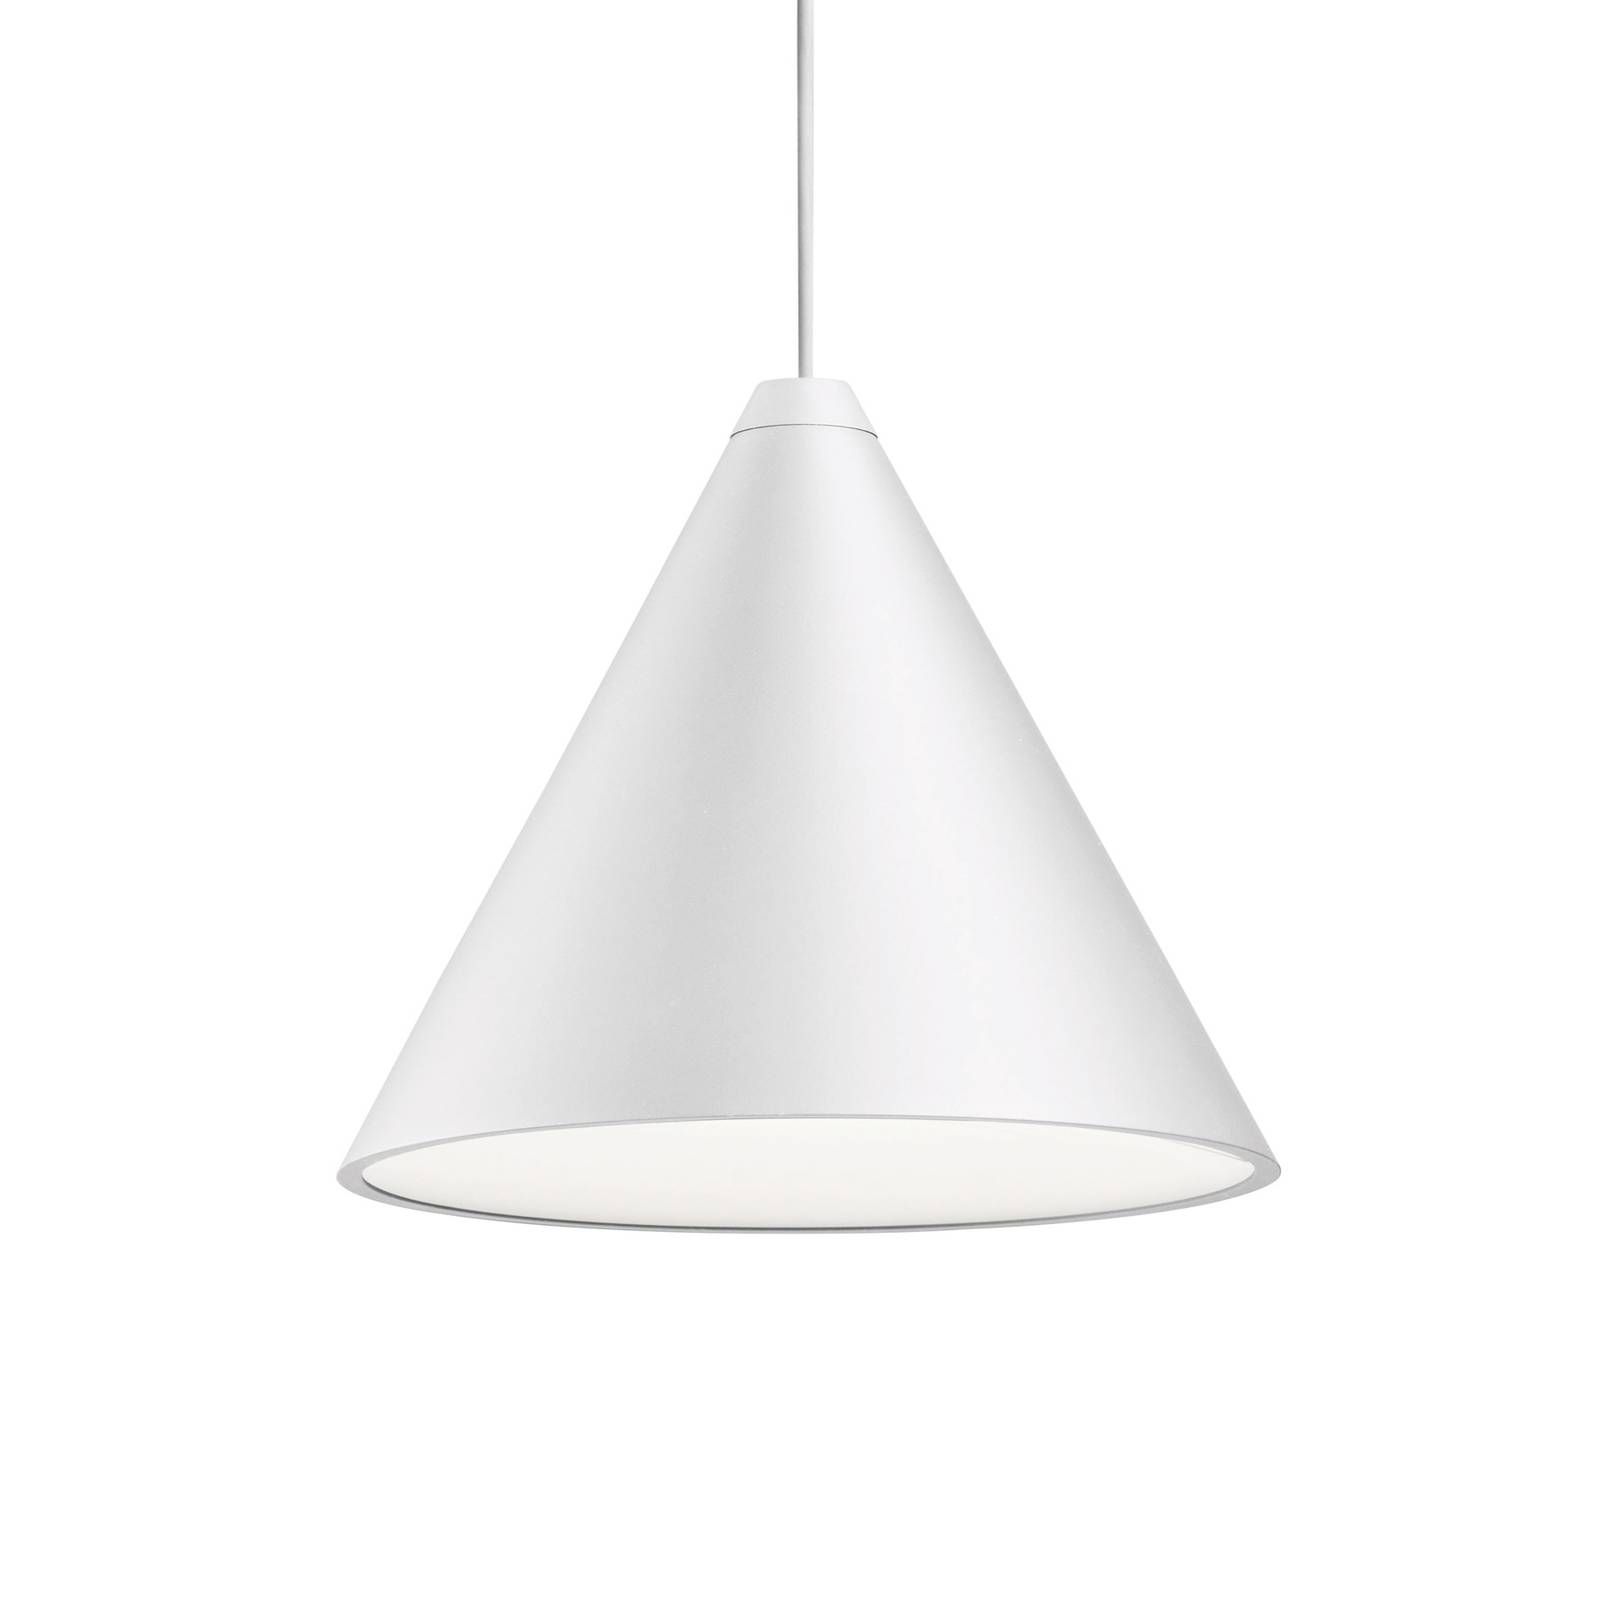 FLOS String Light Cone svietidlo biela 12m touch, Chodba, odliatok hliníkovej zliatiny, polykarbonát, 21W, K: 16cm